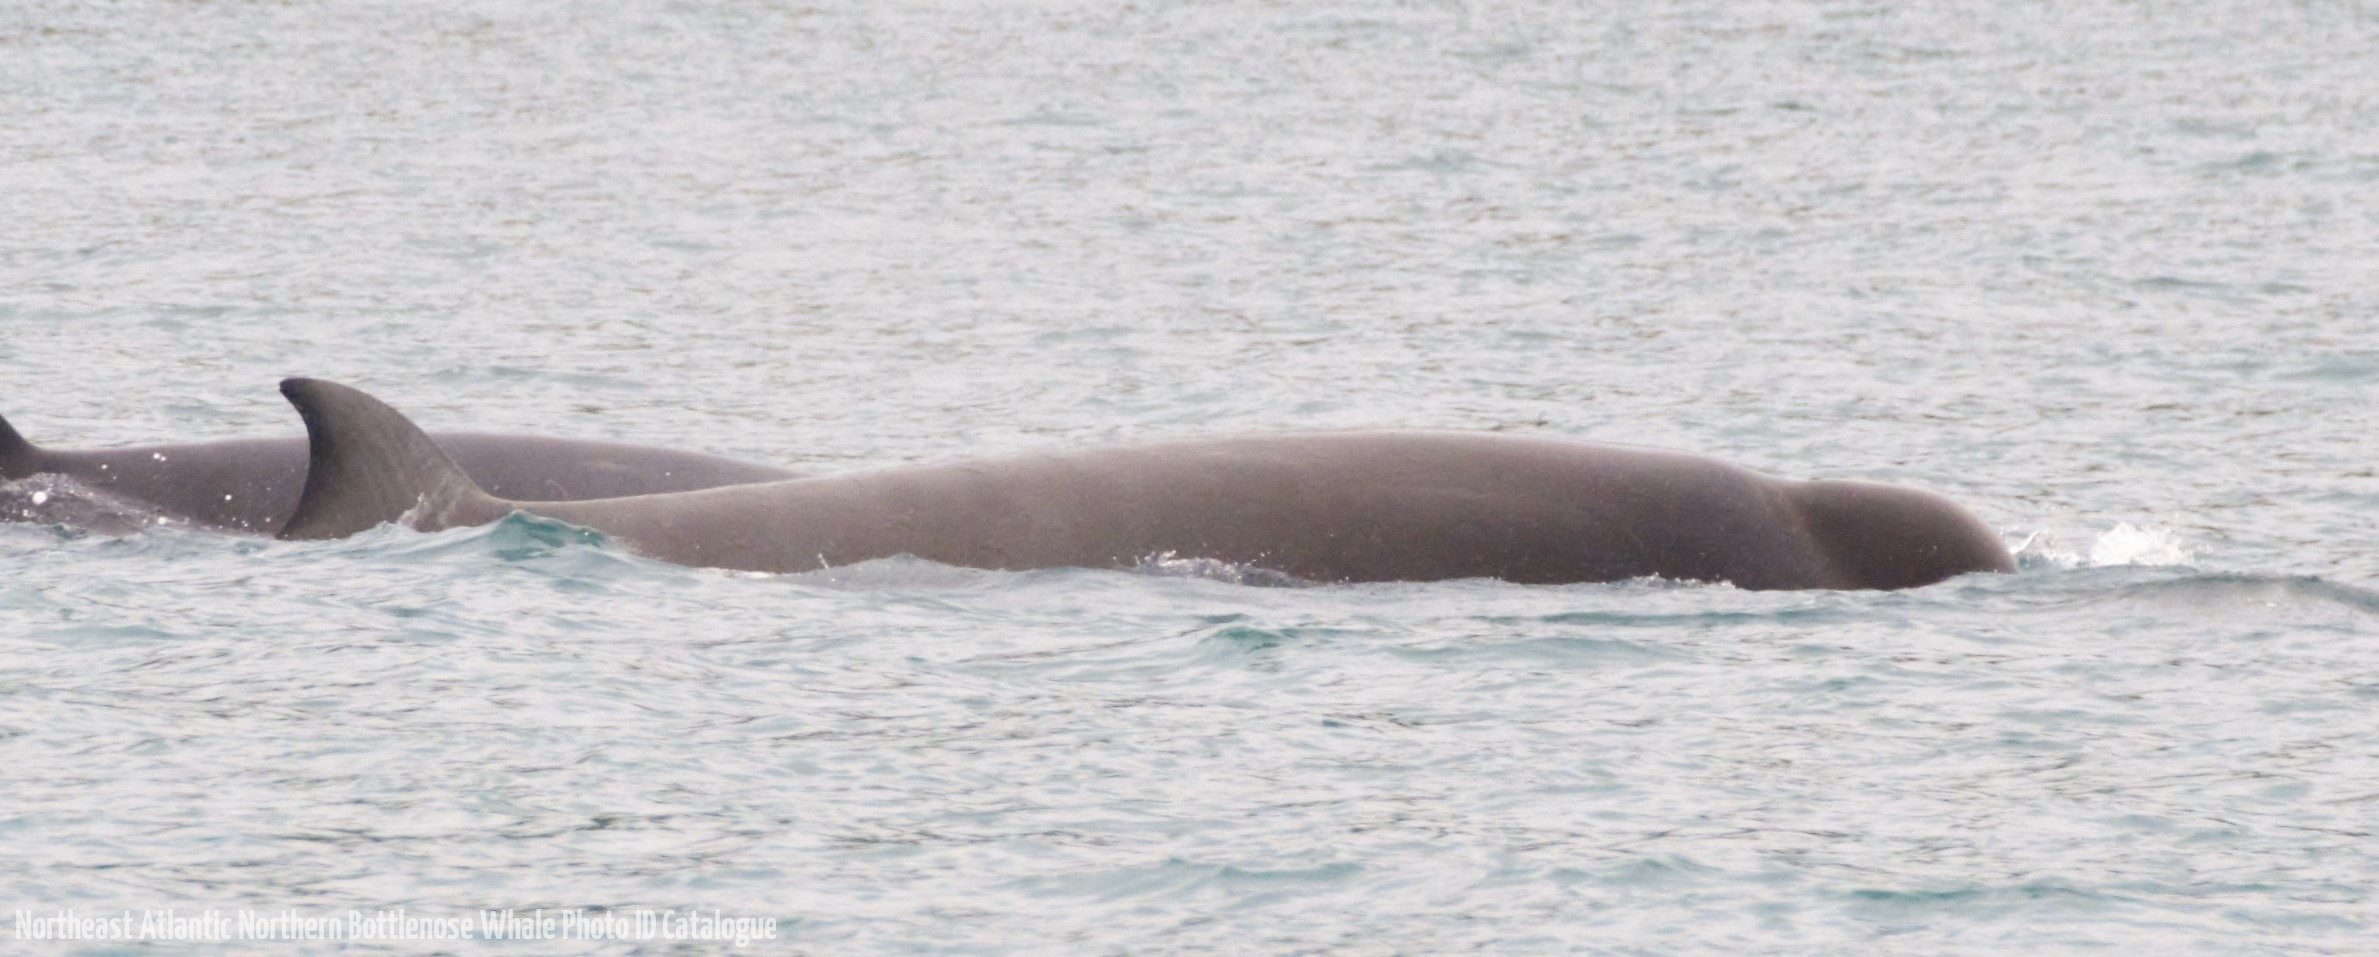 Whale ID: 0230,  Date taken: 21-07-2018,  Photographer: Loes de Heus